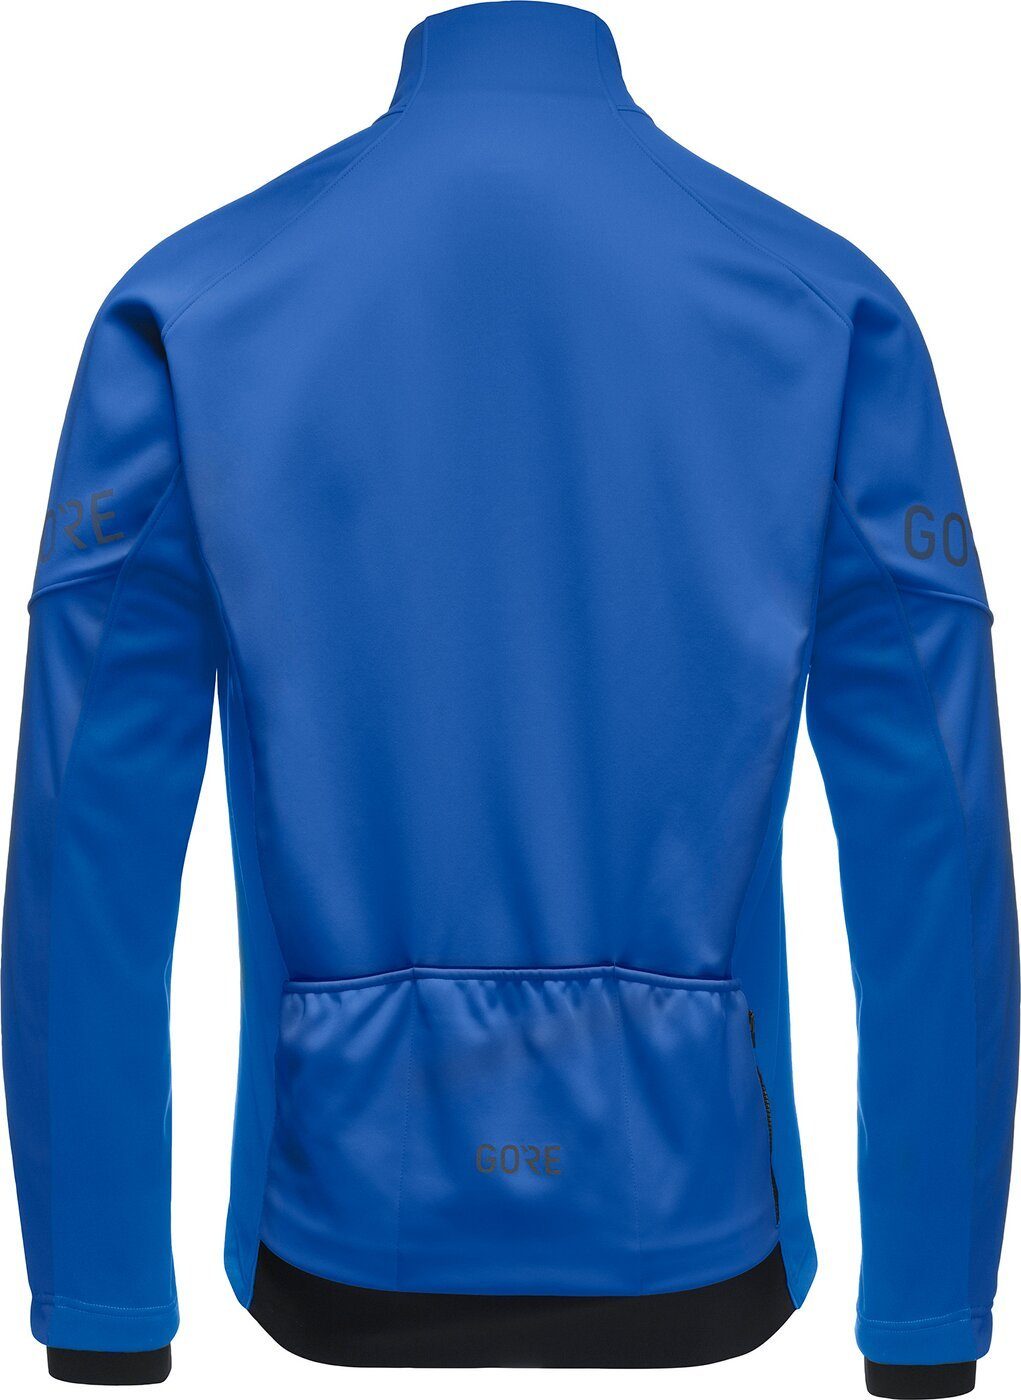 GTX blue BL00 ultramarine GORE® Fahrradjacke I Jacke C3 Thermo Wear